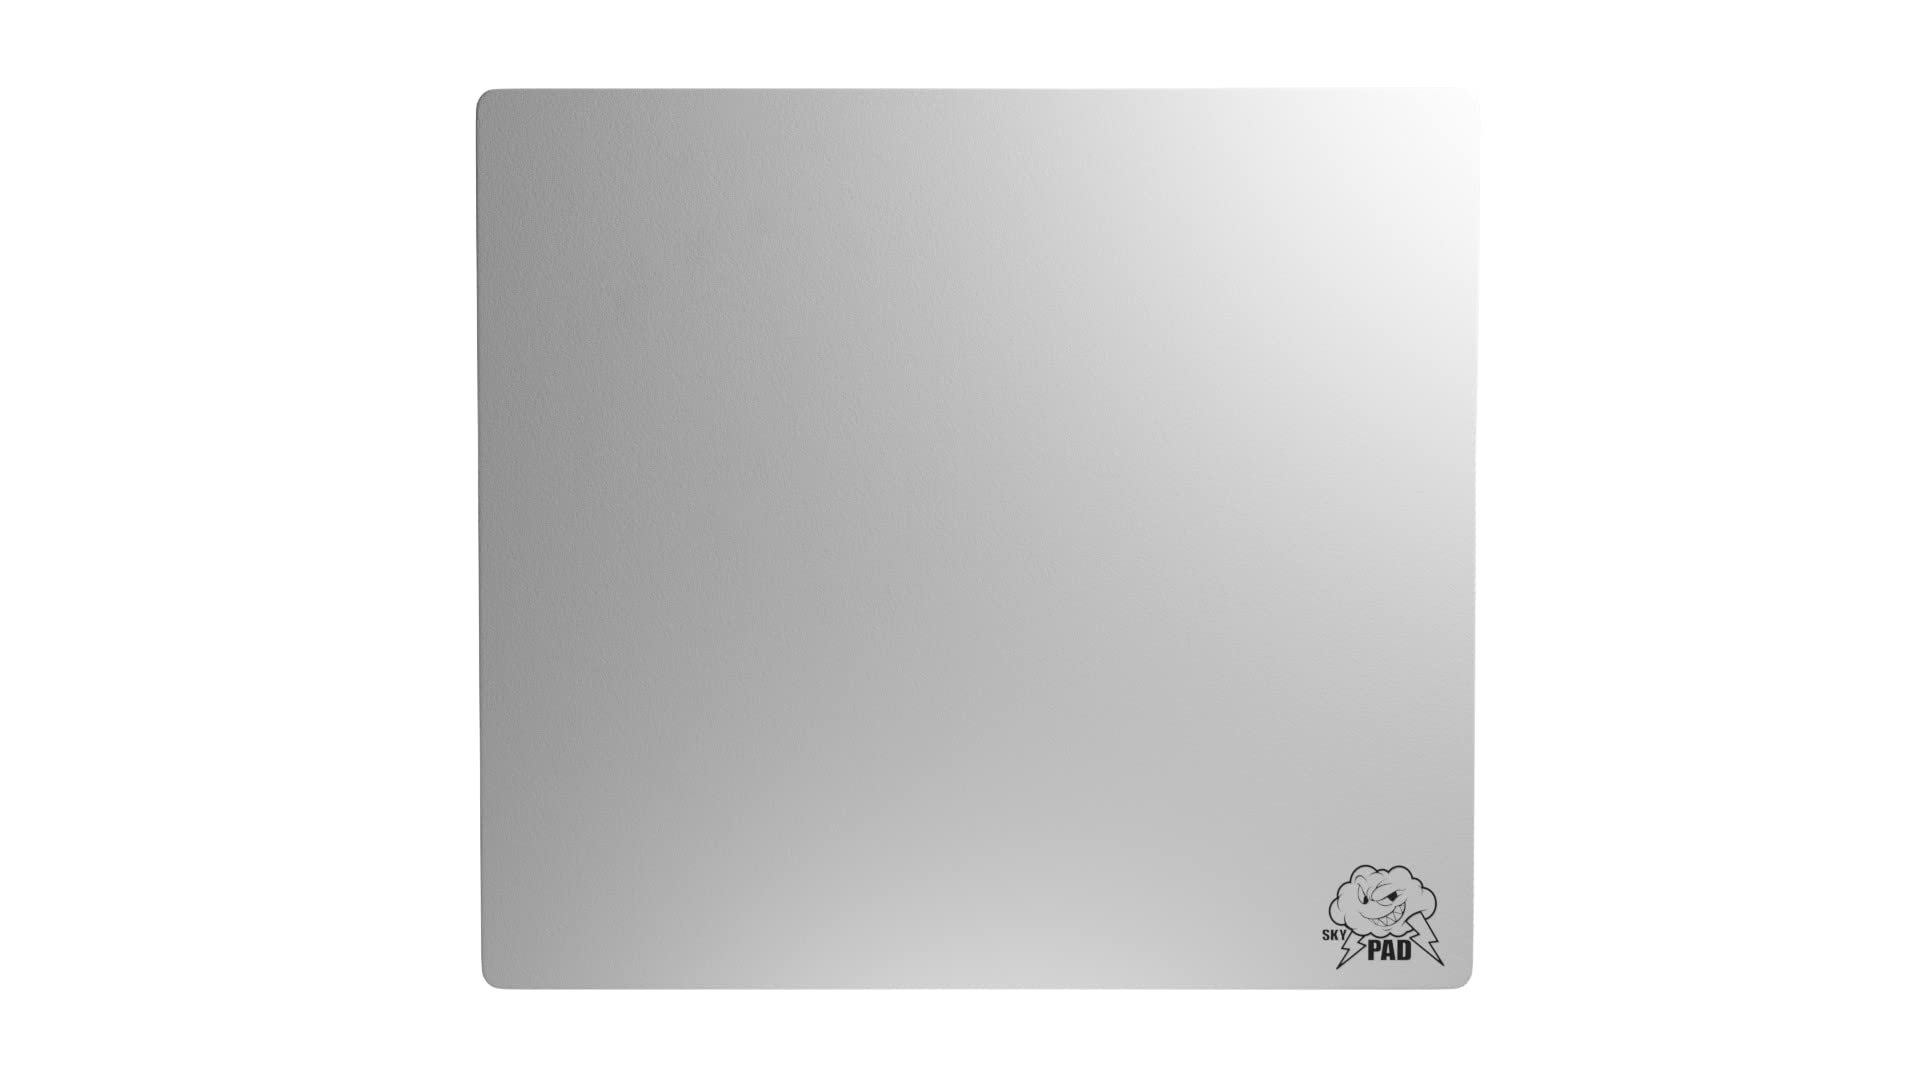 yuki-aim skypad review • aesthetic glass pad for valorant? - YouTube